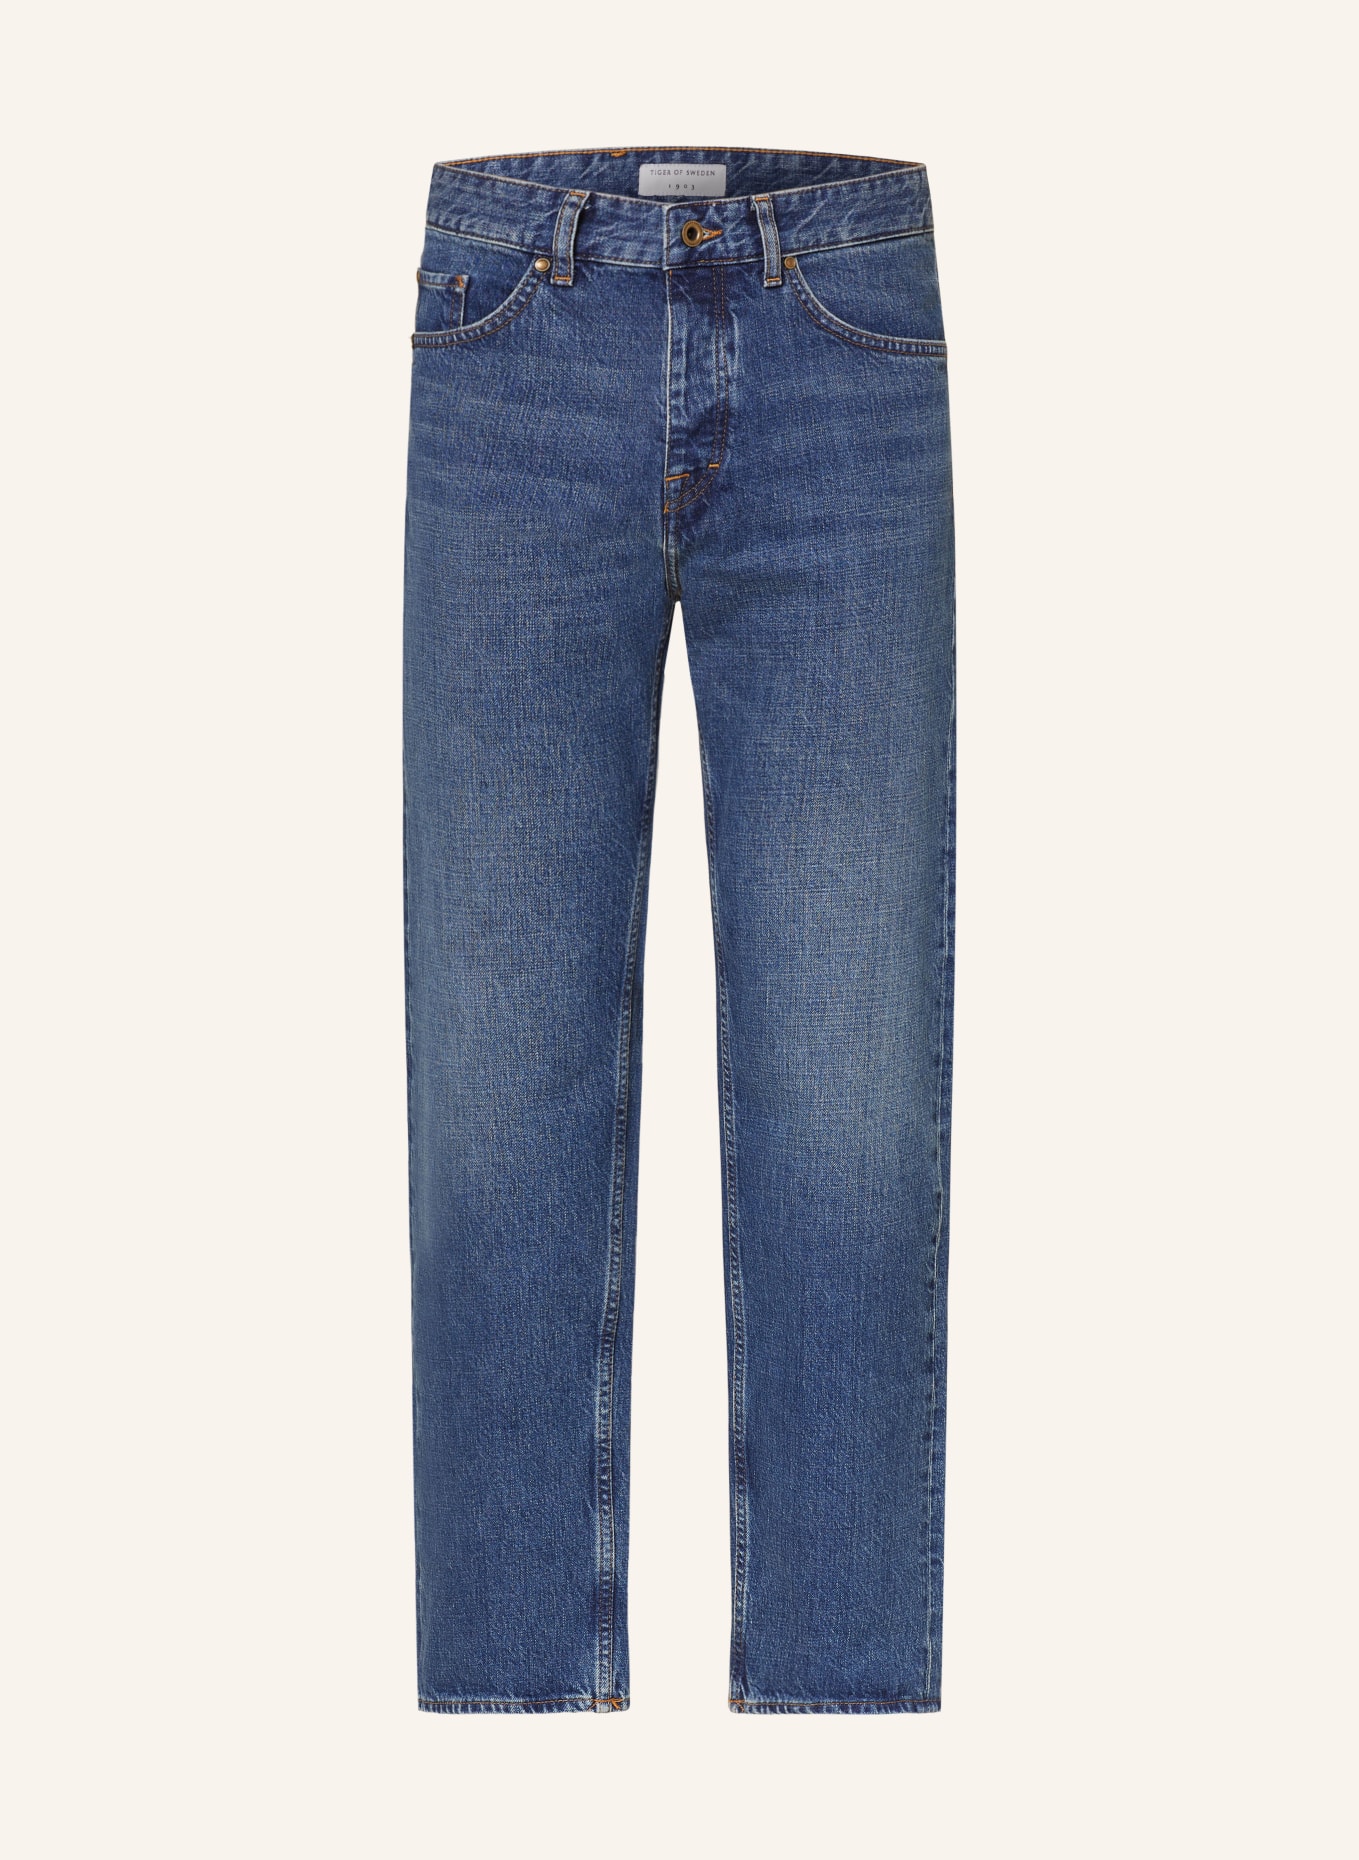 TIGER OF SWEDEN Jeans ALEC Slim Fit, Farbe: 209 midnight blue (Bild 1)